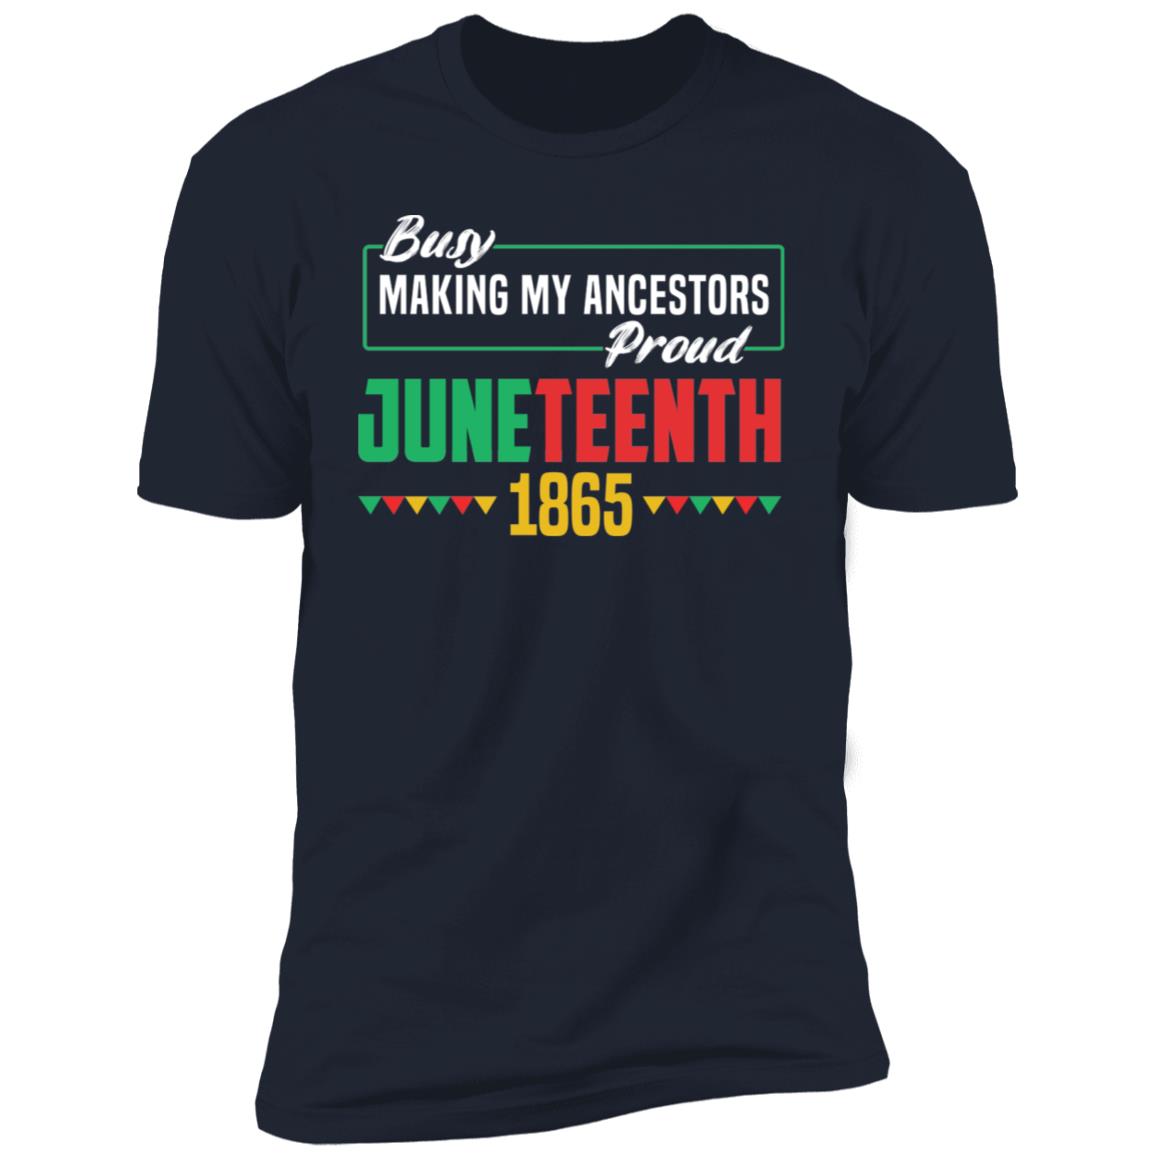 Busy Making My Ancestors Proud - Juneteenth T-shirt Apparel Gearment Premium T-Shirt Navy S